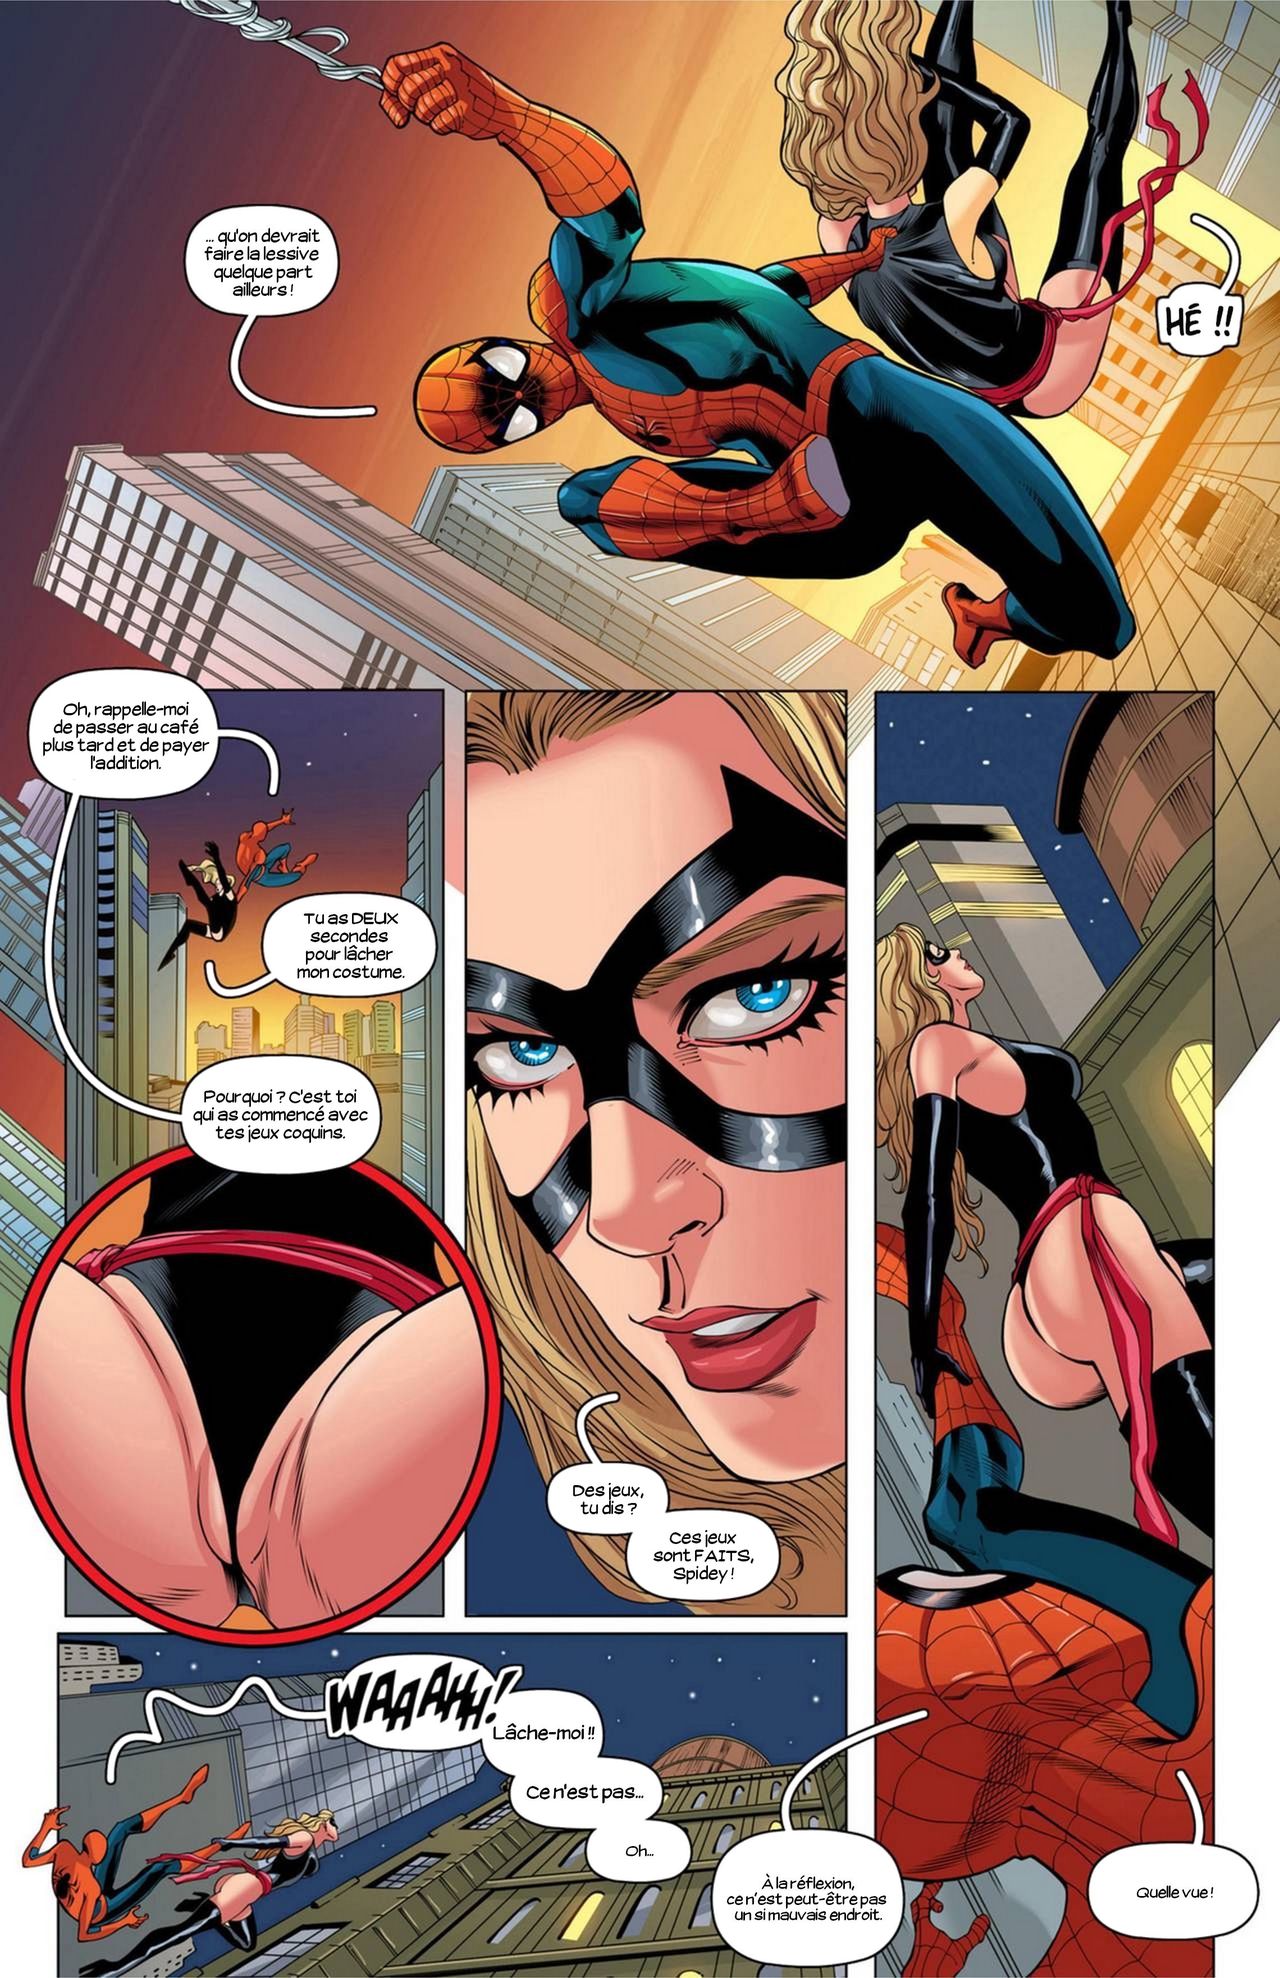 The  Spider-Man & Ms. Marvel numero d'image 3